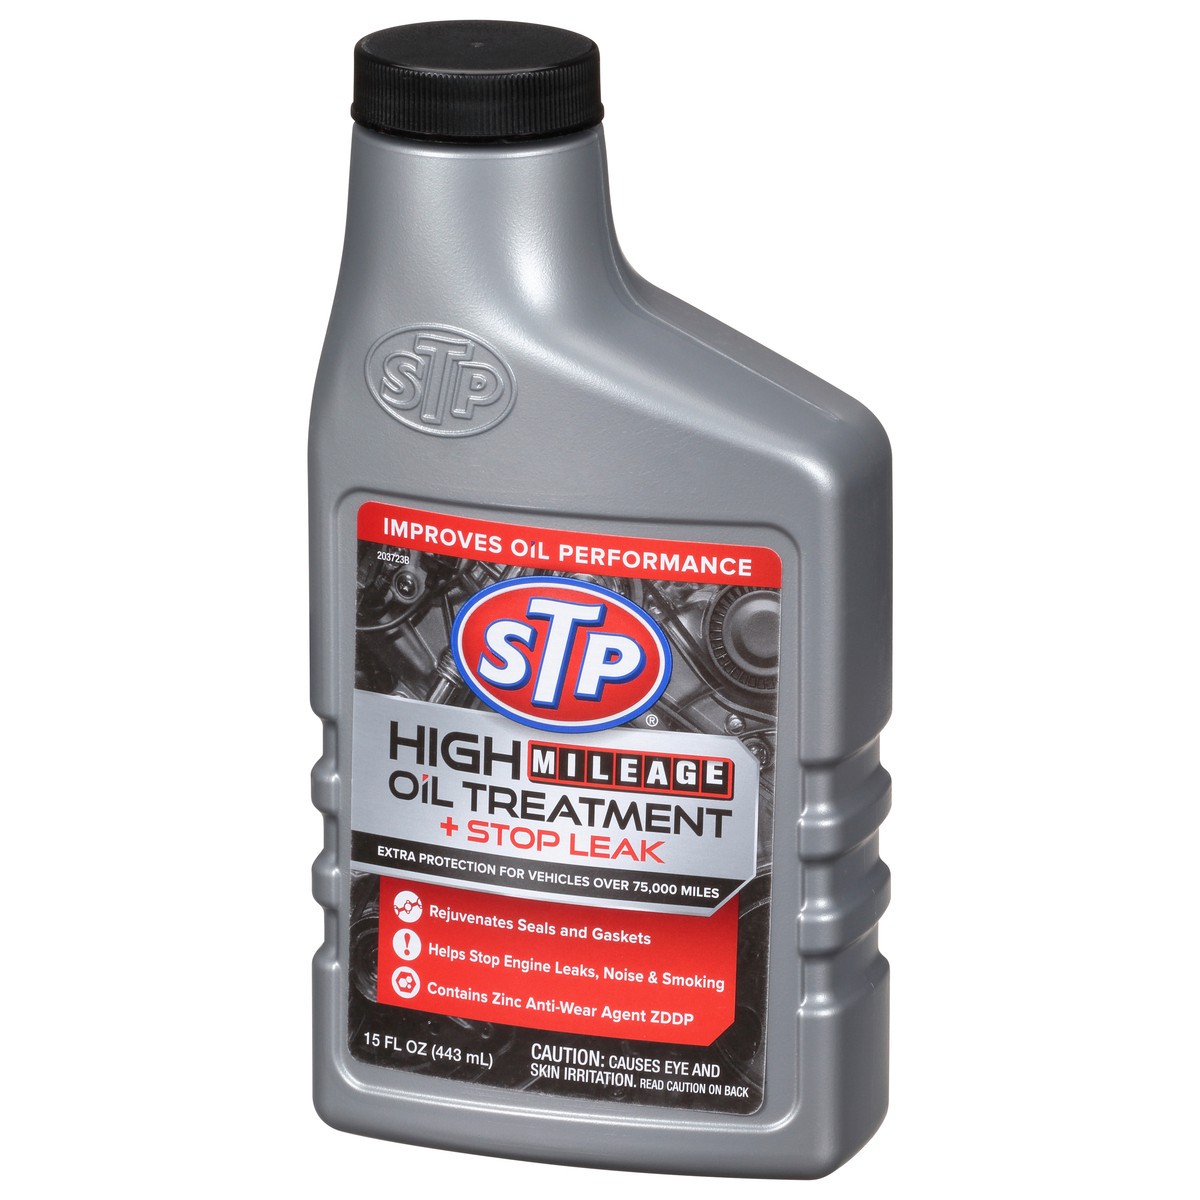 slide 8 of 9, STP High Mileage Oil Treatment + Stop Leak - 15 FL OZ, 15 fl oz